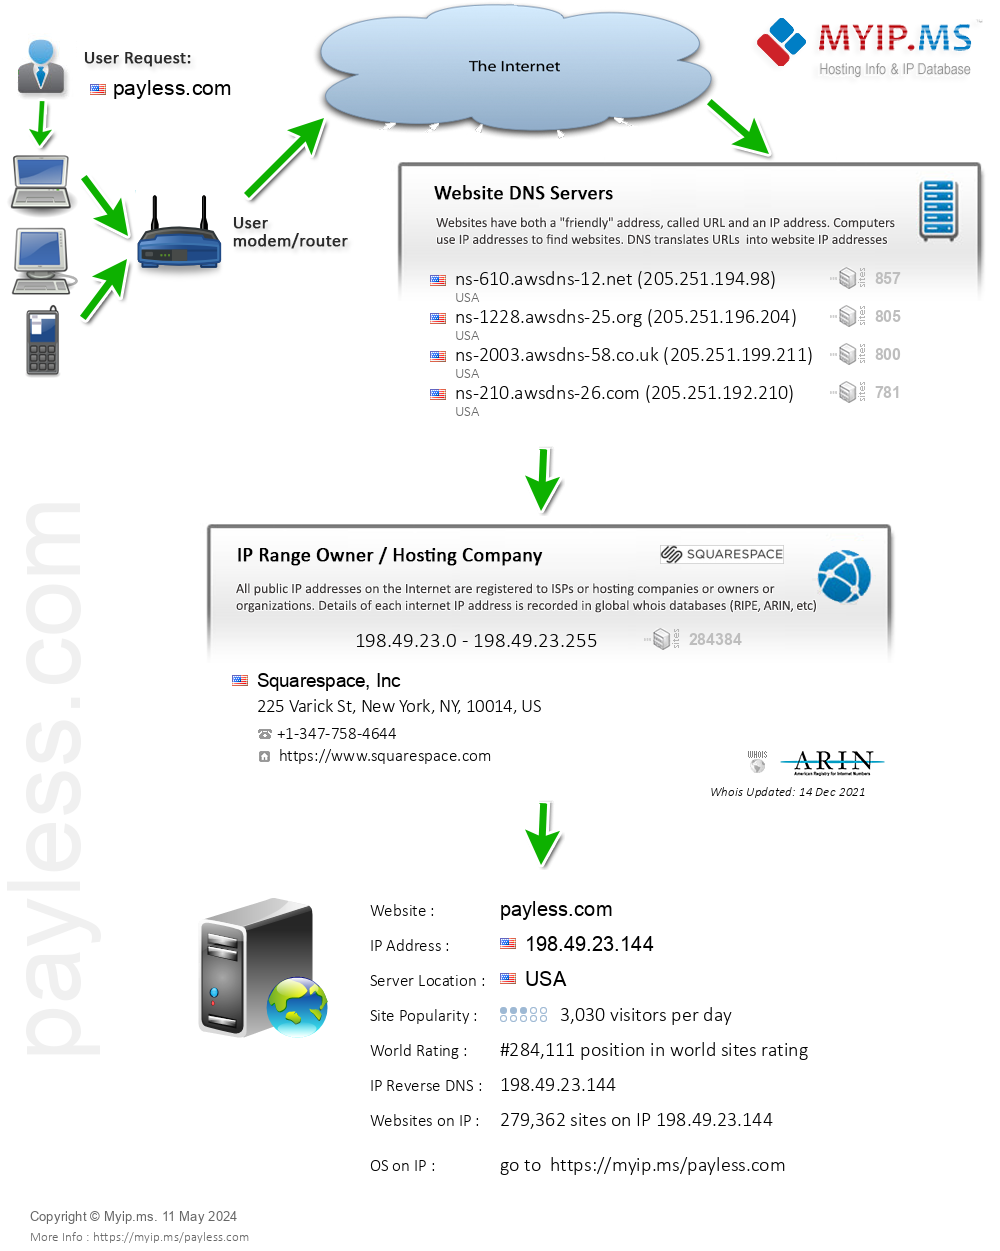 Payless.com - Website Hosting Visual IP Diagram